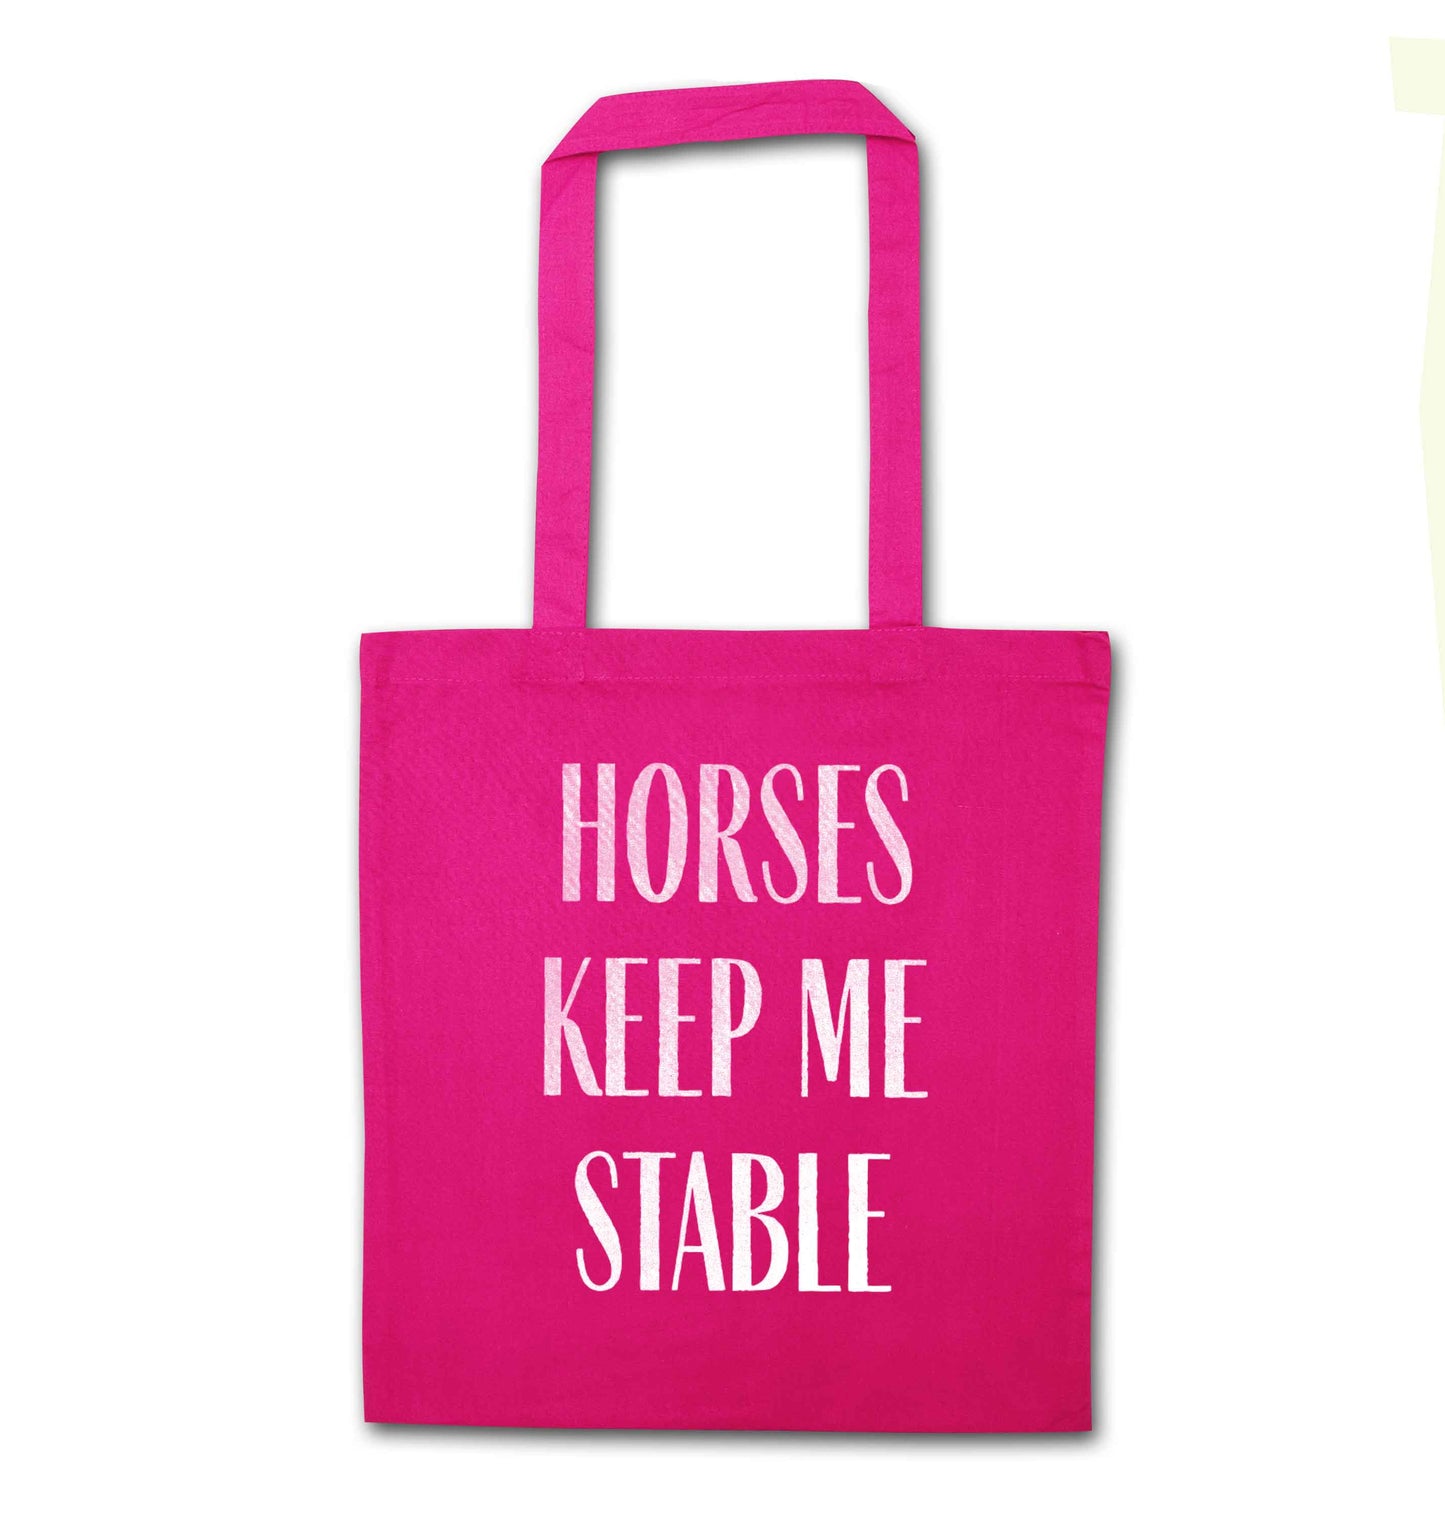 Horses keep me stable pink tote bag